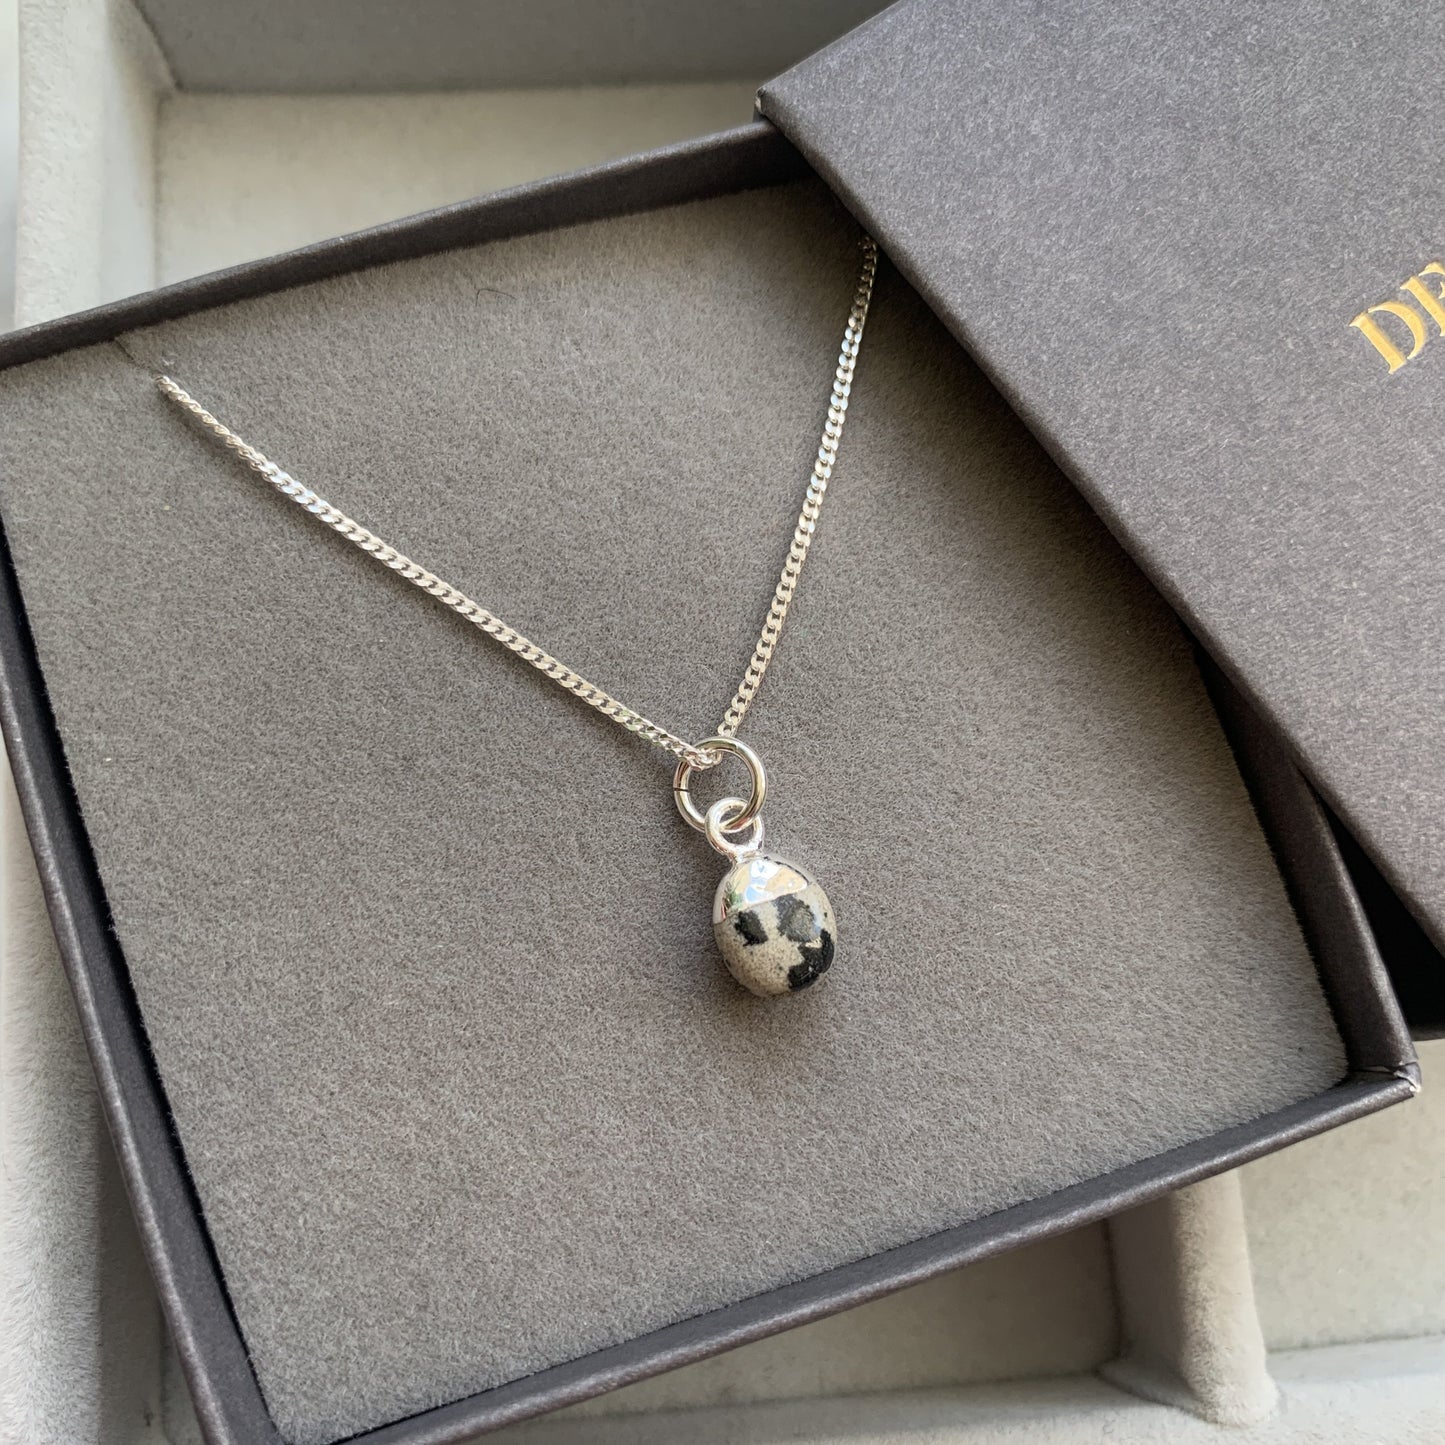 Tiny Tumbled Gemstone Necklace - Silver - Dalmatian - Decadorn